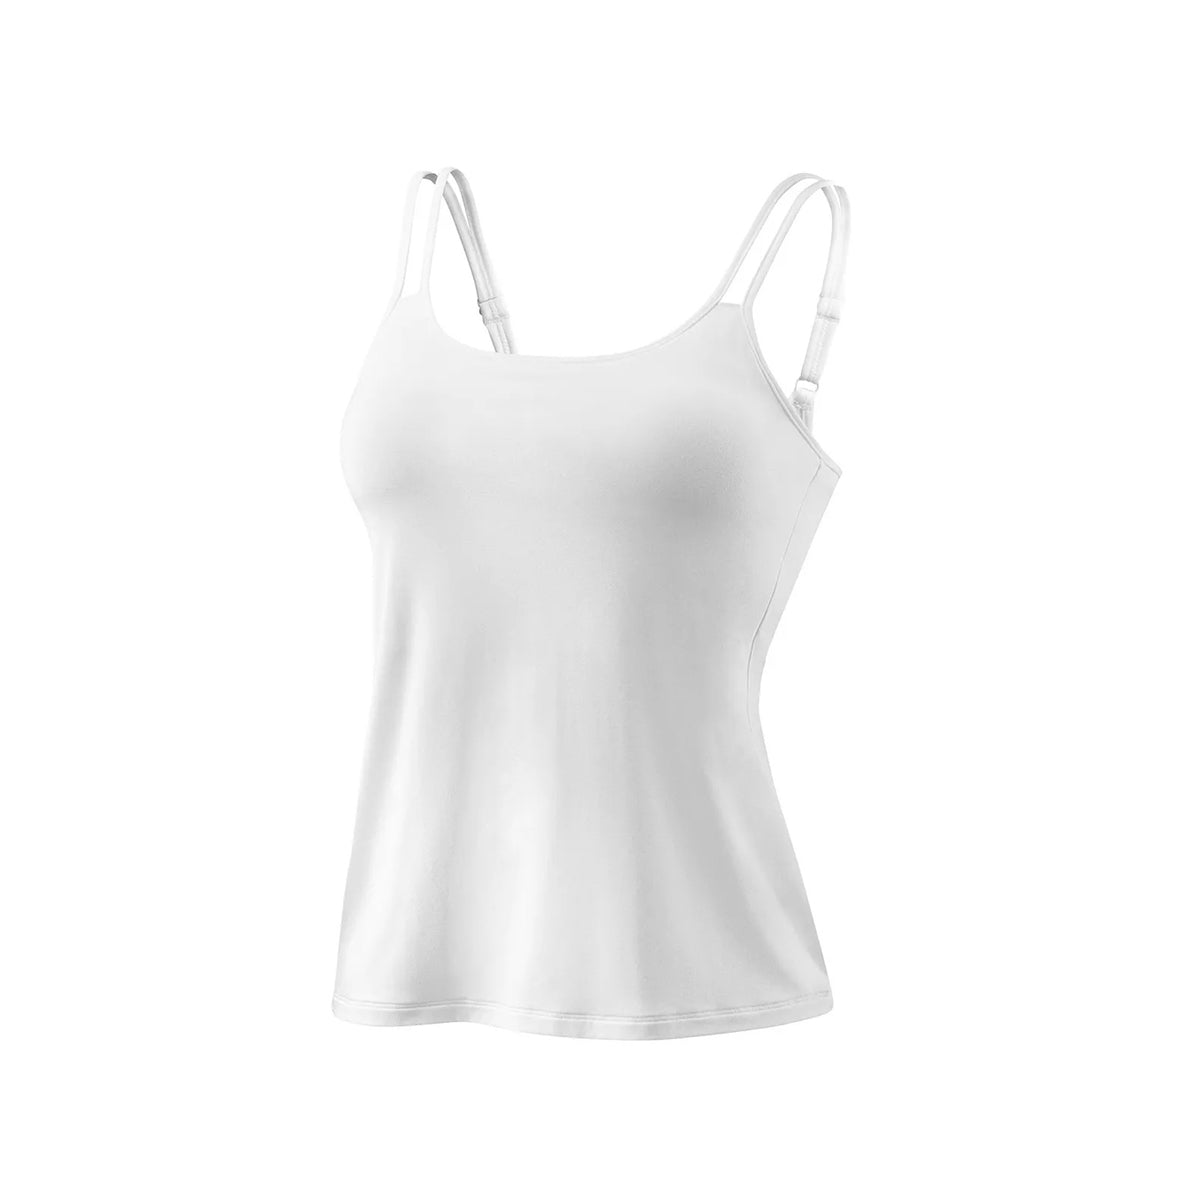 Amoena Valletta cami in White shelf bra built-in bra mastectomy clothing lingerie canada linea intima toronto valetta tank